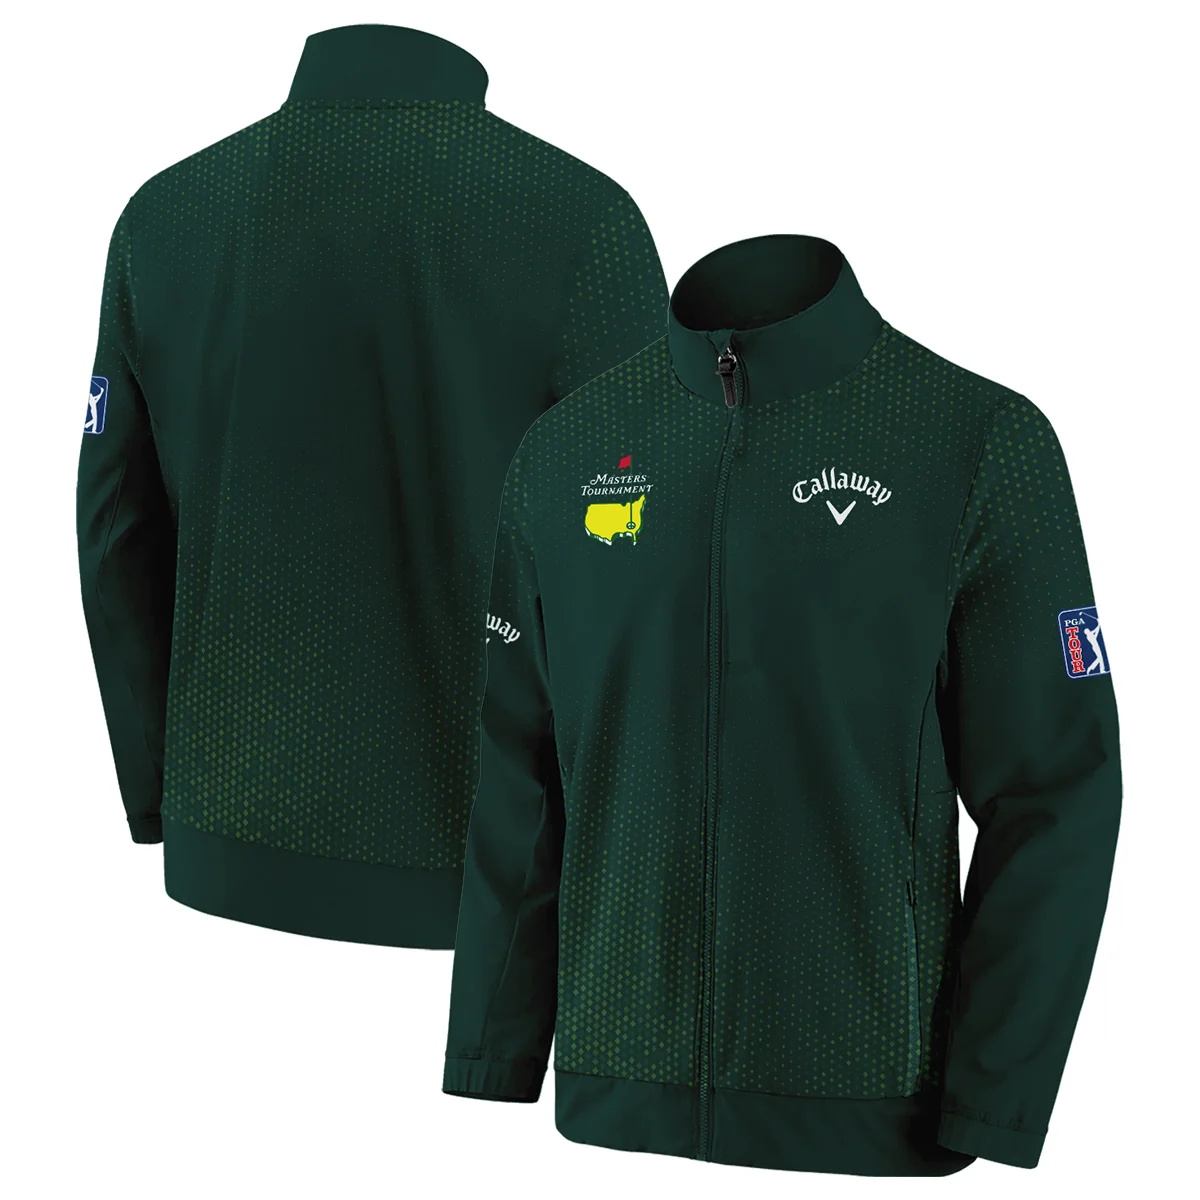 Golf Sport Masters Tournament Callaway Long Polo Shirt Sports Dinamond Shape Dark Green Long Polo Shirt For Men